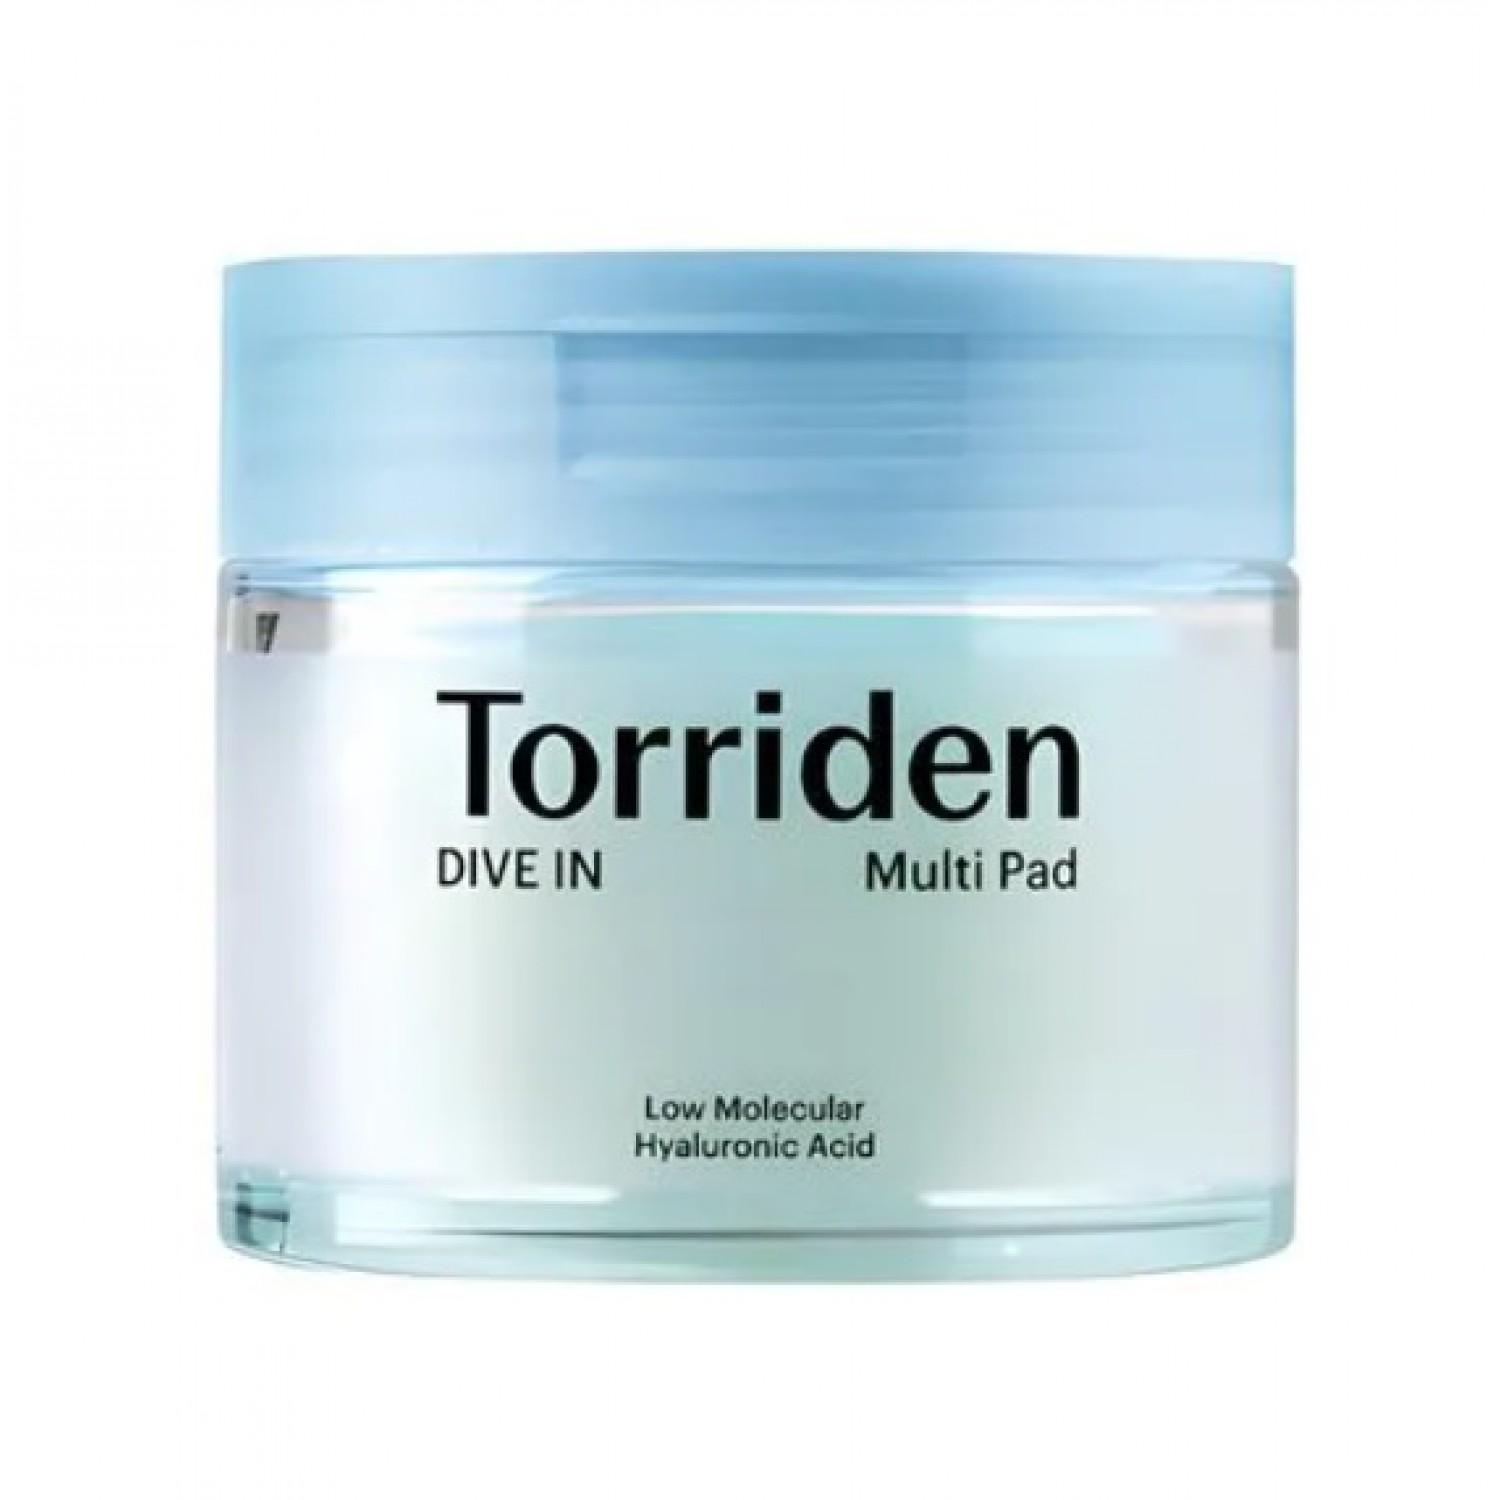 Torriden Dive-In Low Molecule Hyaluronic Acid Multi Pad